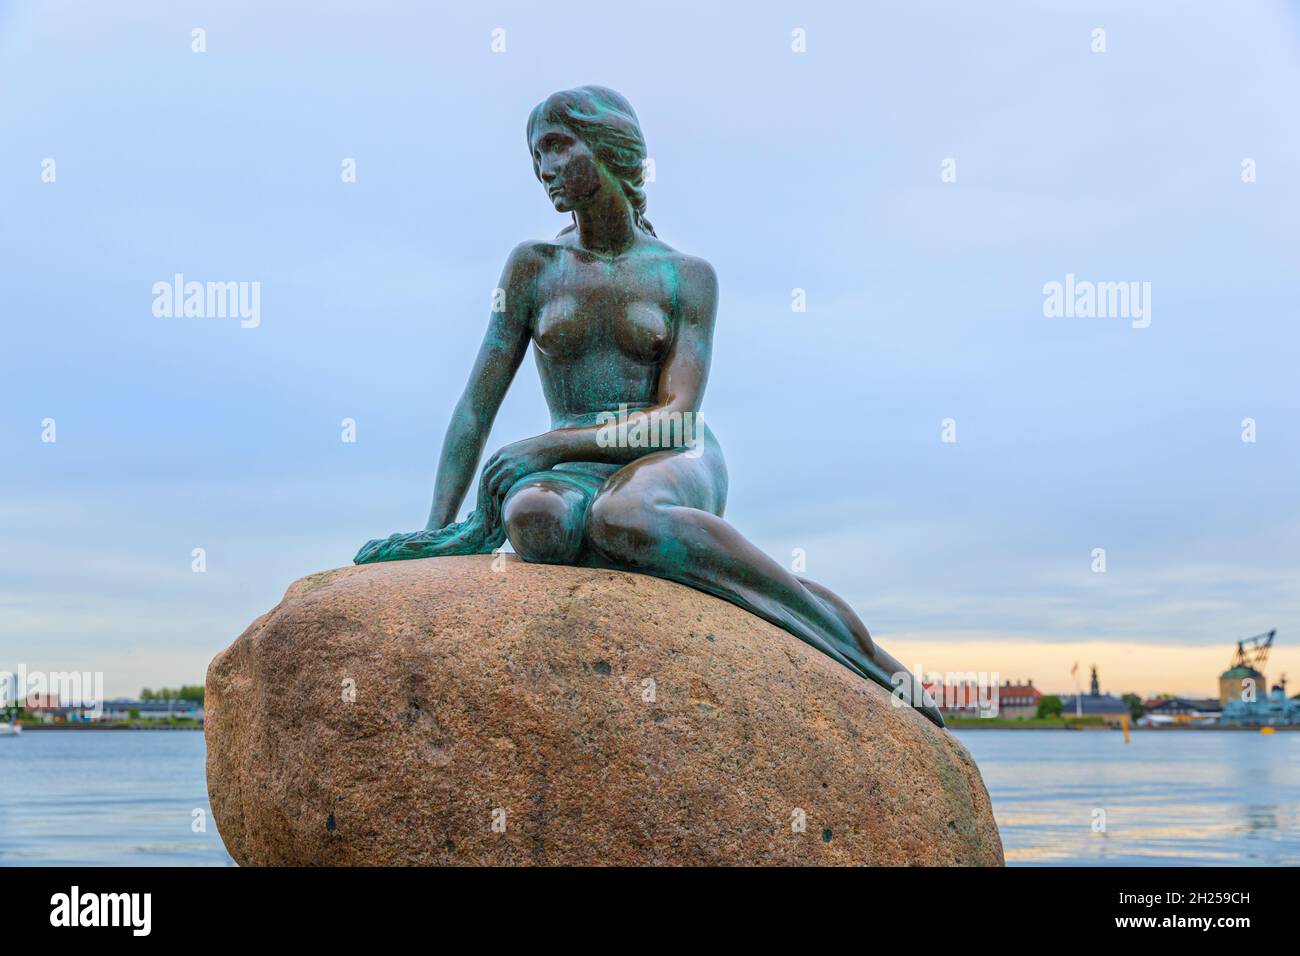 Copenhagen, Denmark, September 21, 2021: The Little Mermaid, statue by Edvard Eriksen on a rock in the water at the Langelinie promenade Stock Photo